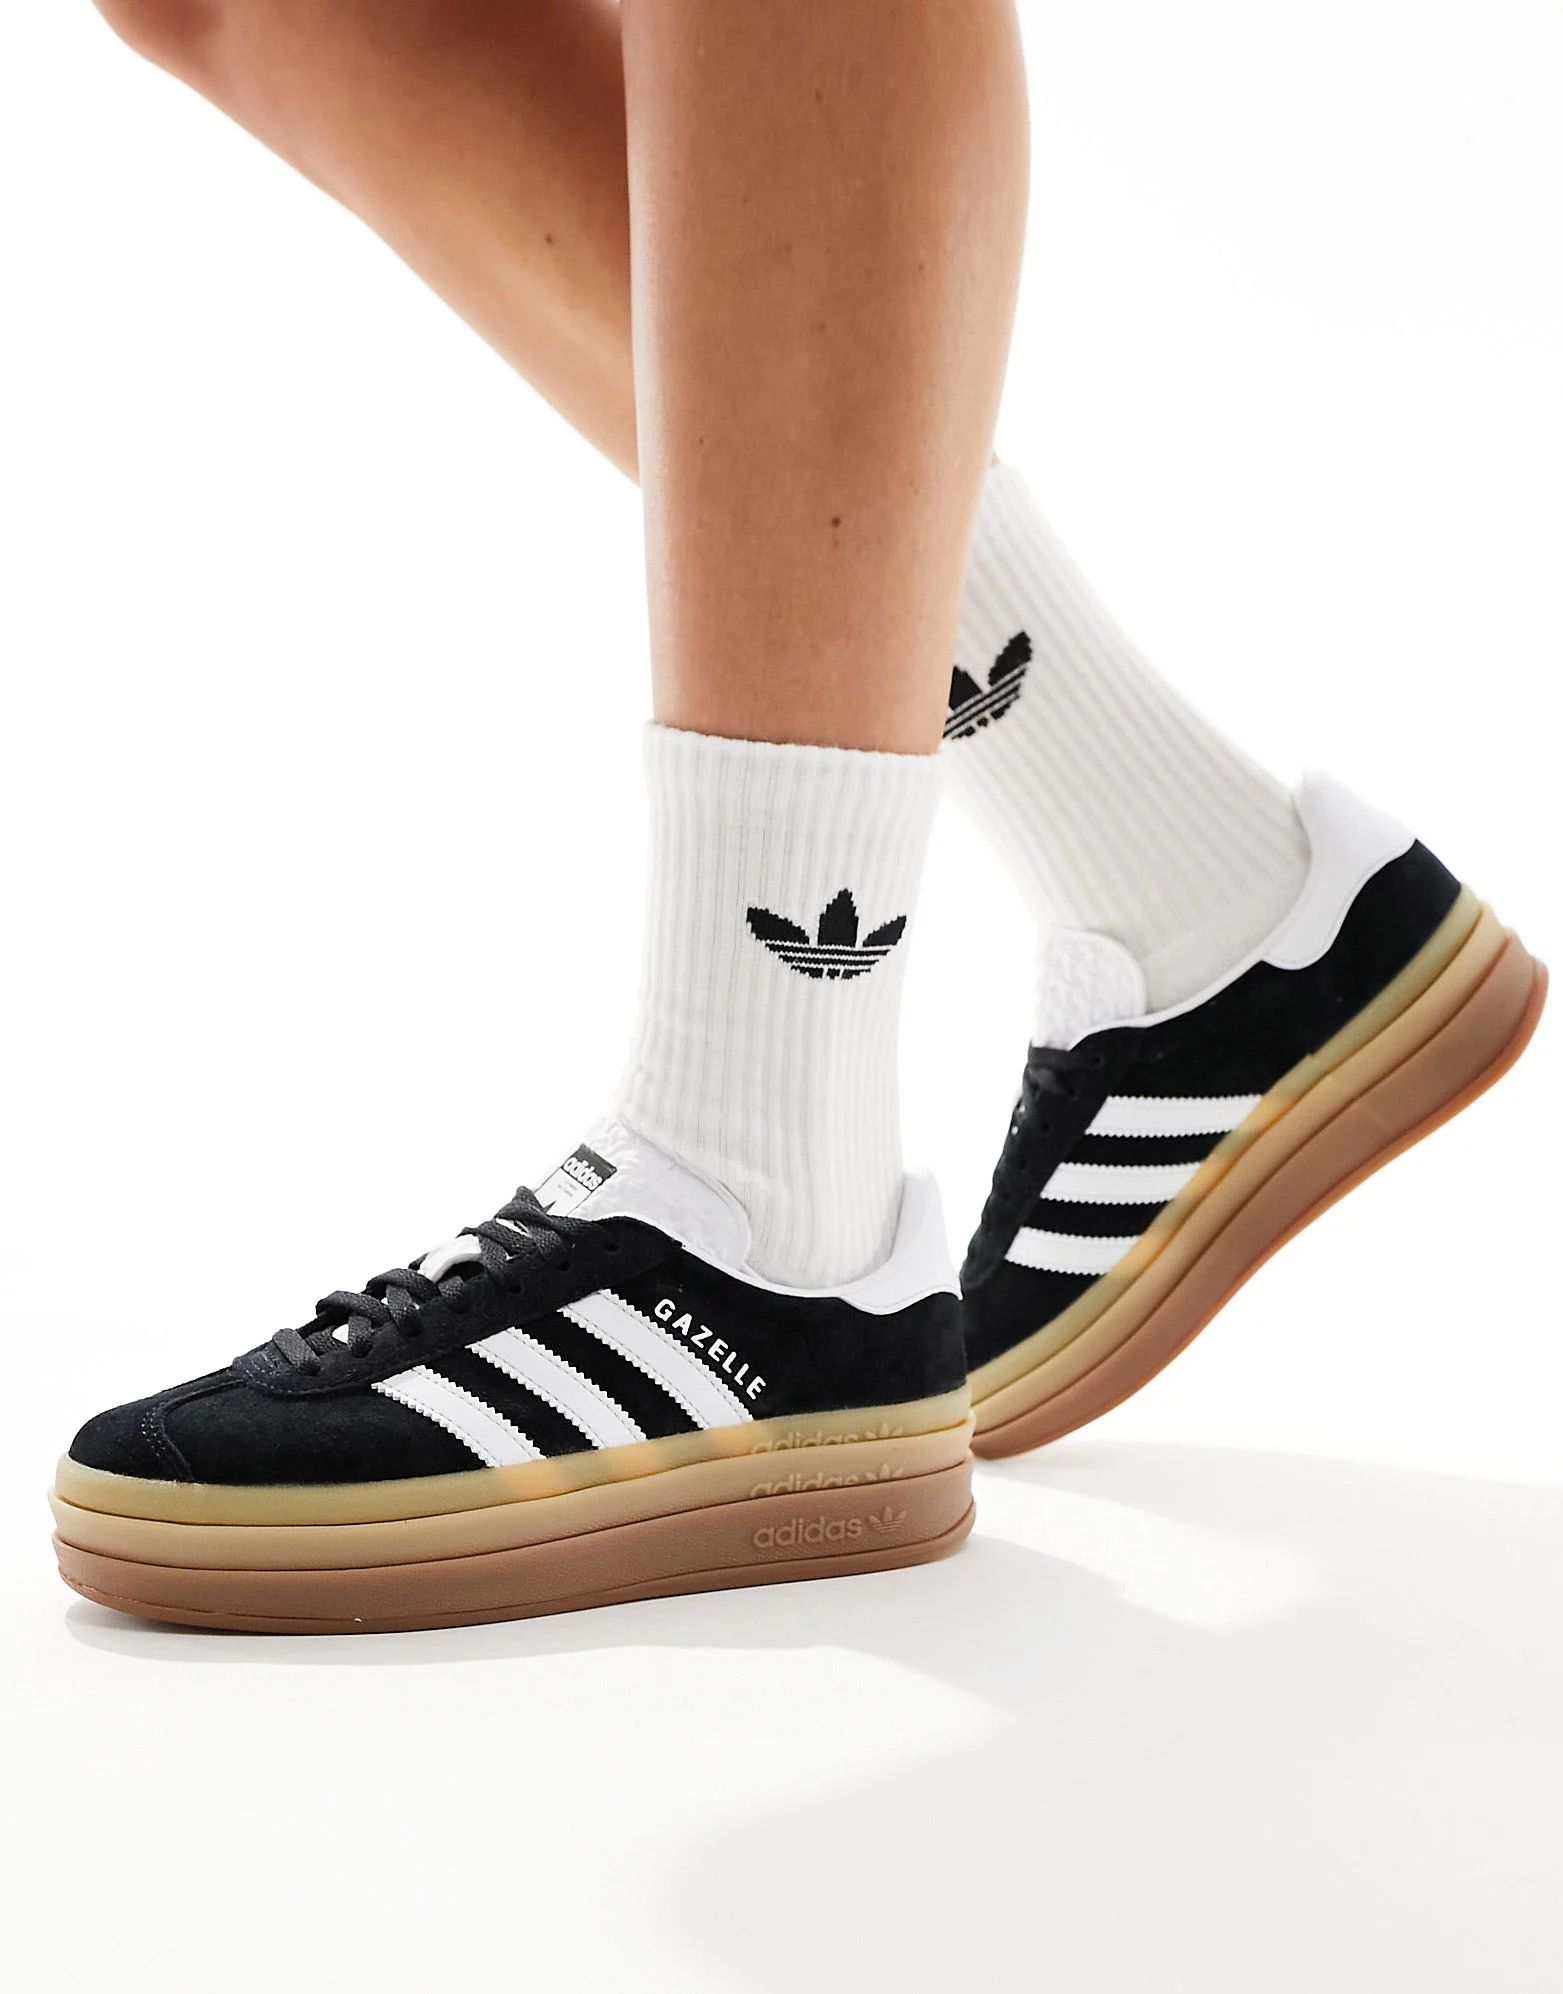 adidas Originals Gazelle Bold gum sole sneakers in black | ASOS (Global)